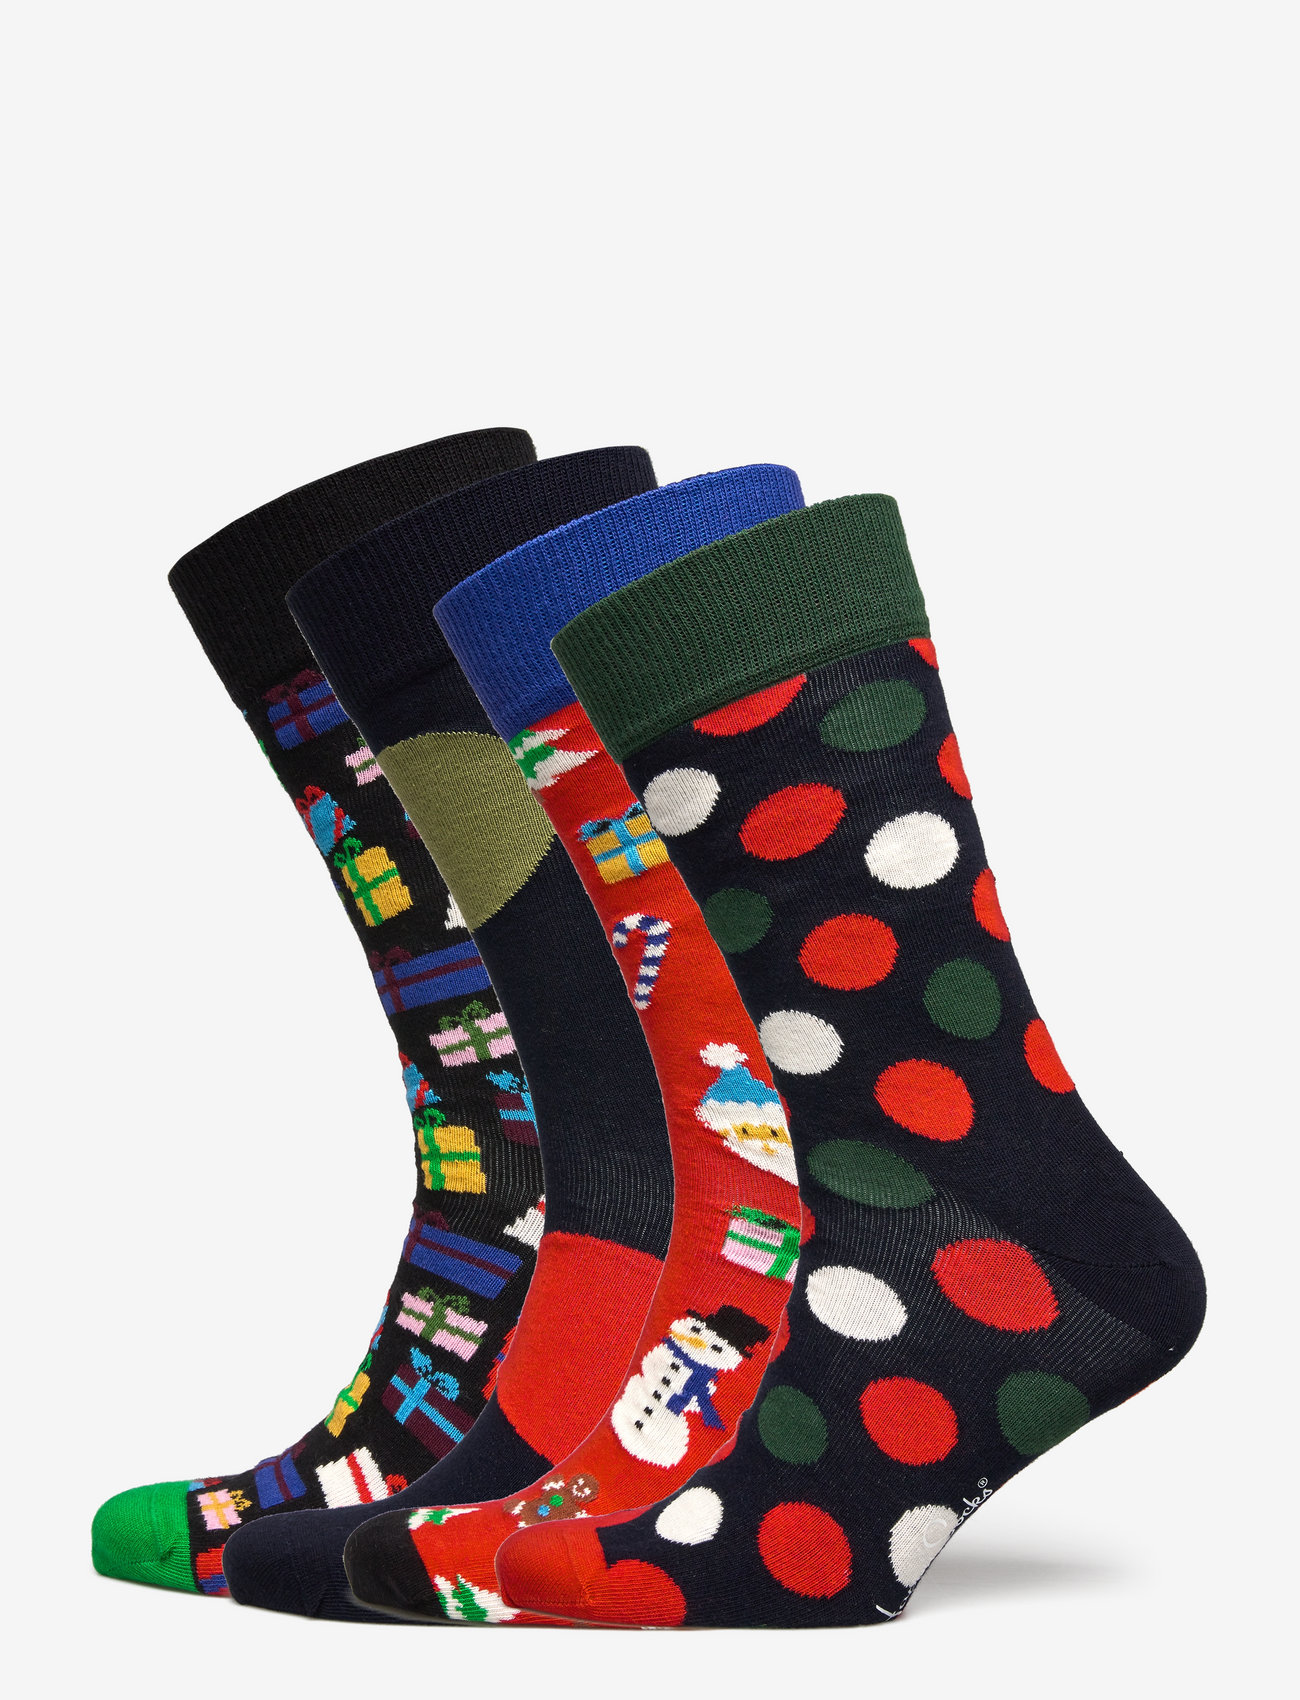 Womens Clothing Hosiery Happy Socks 4-pack Gift Bonanza Gift Set Fashion Socks in Green 